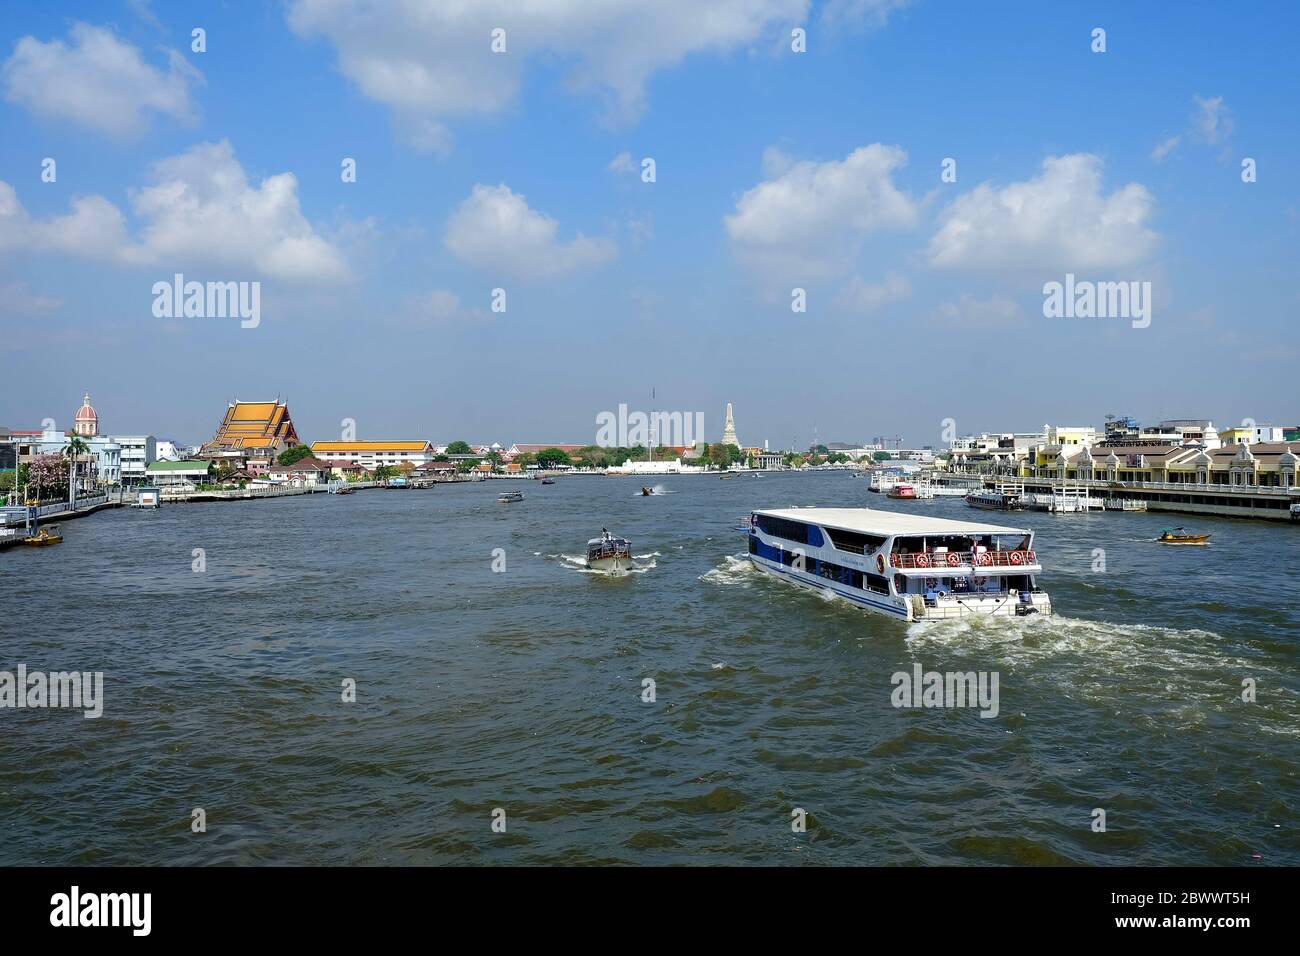 BANGKOK, THAILAND - MARCH 13, 2019: Scenery of Chaophraya River from Phra Phuttha Yodfa Bridge. Chaophraya River is the major river in Thailand. Stock Photo